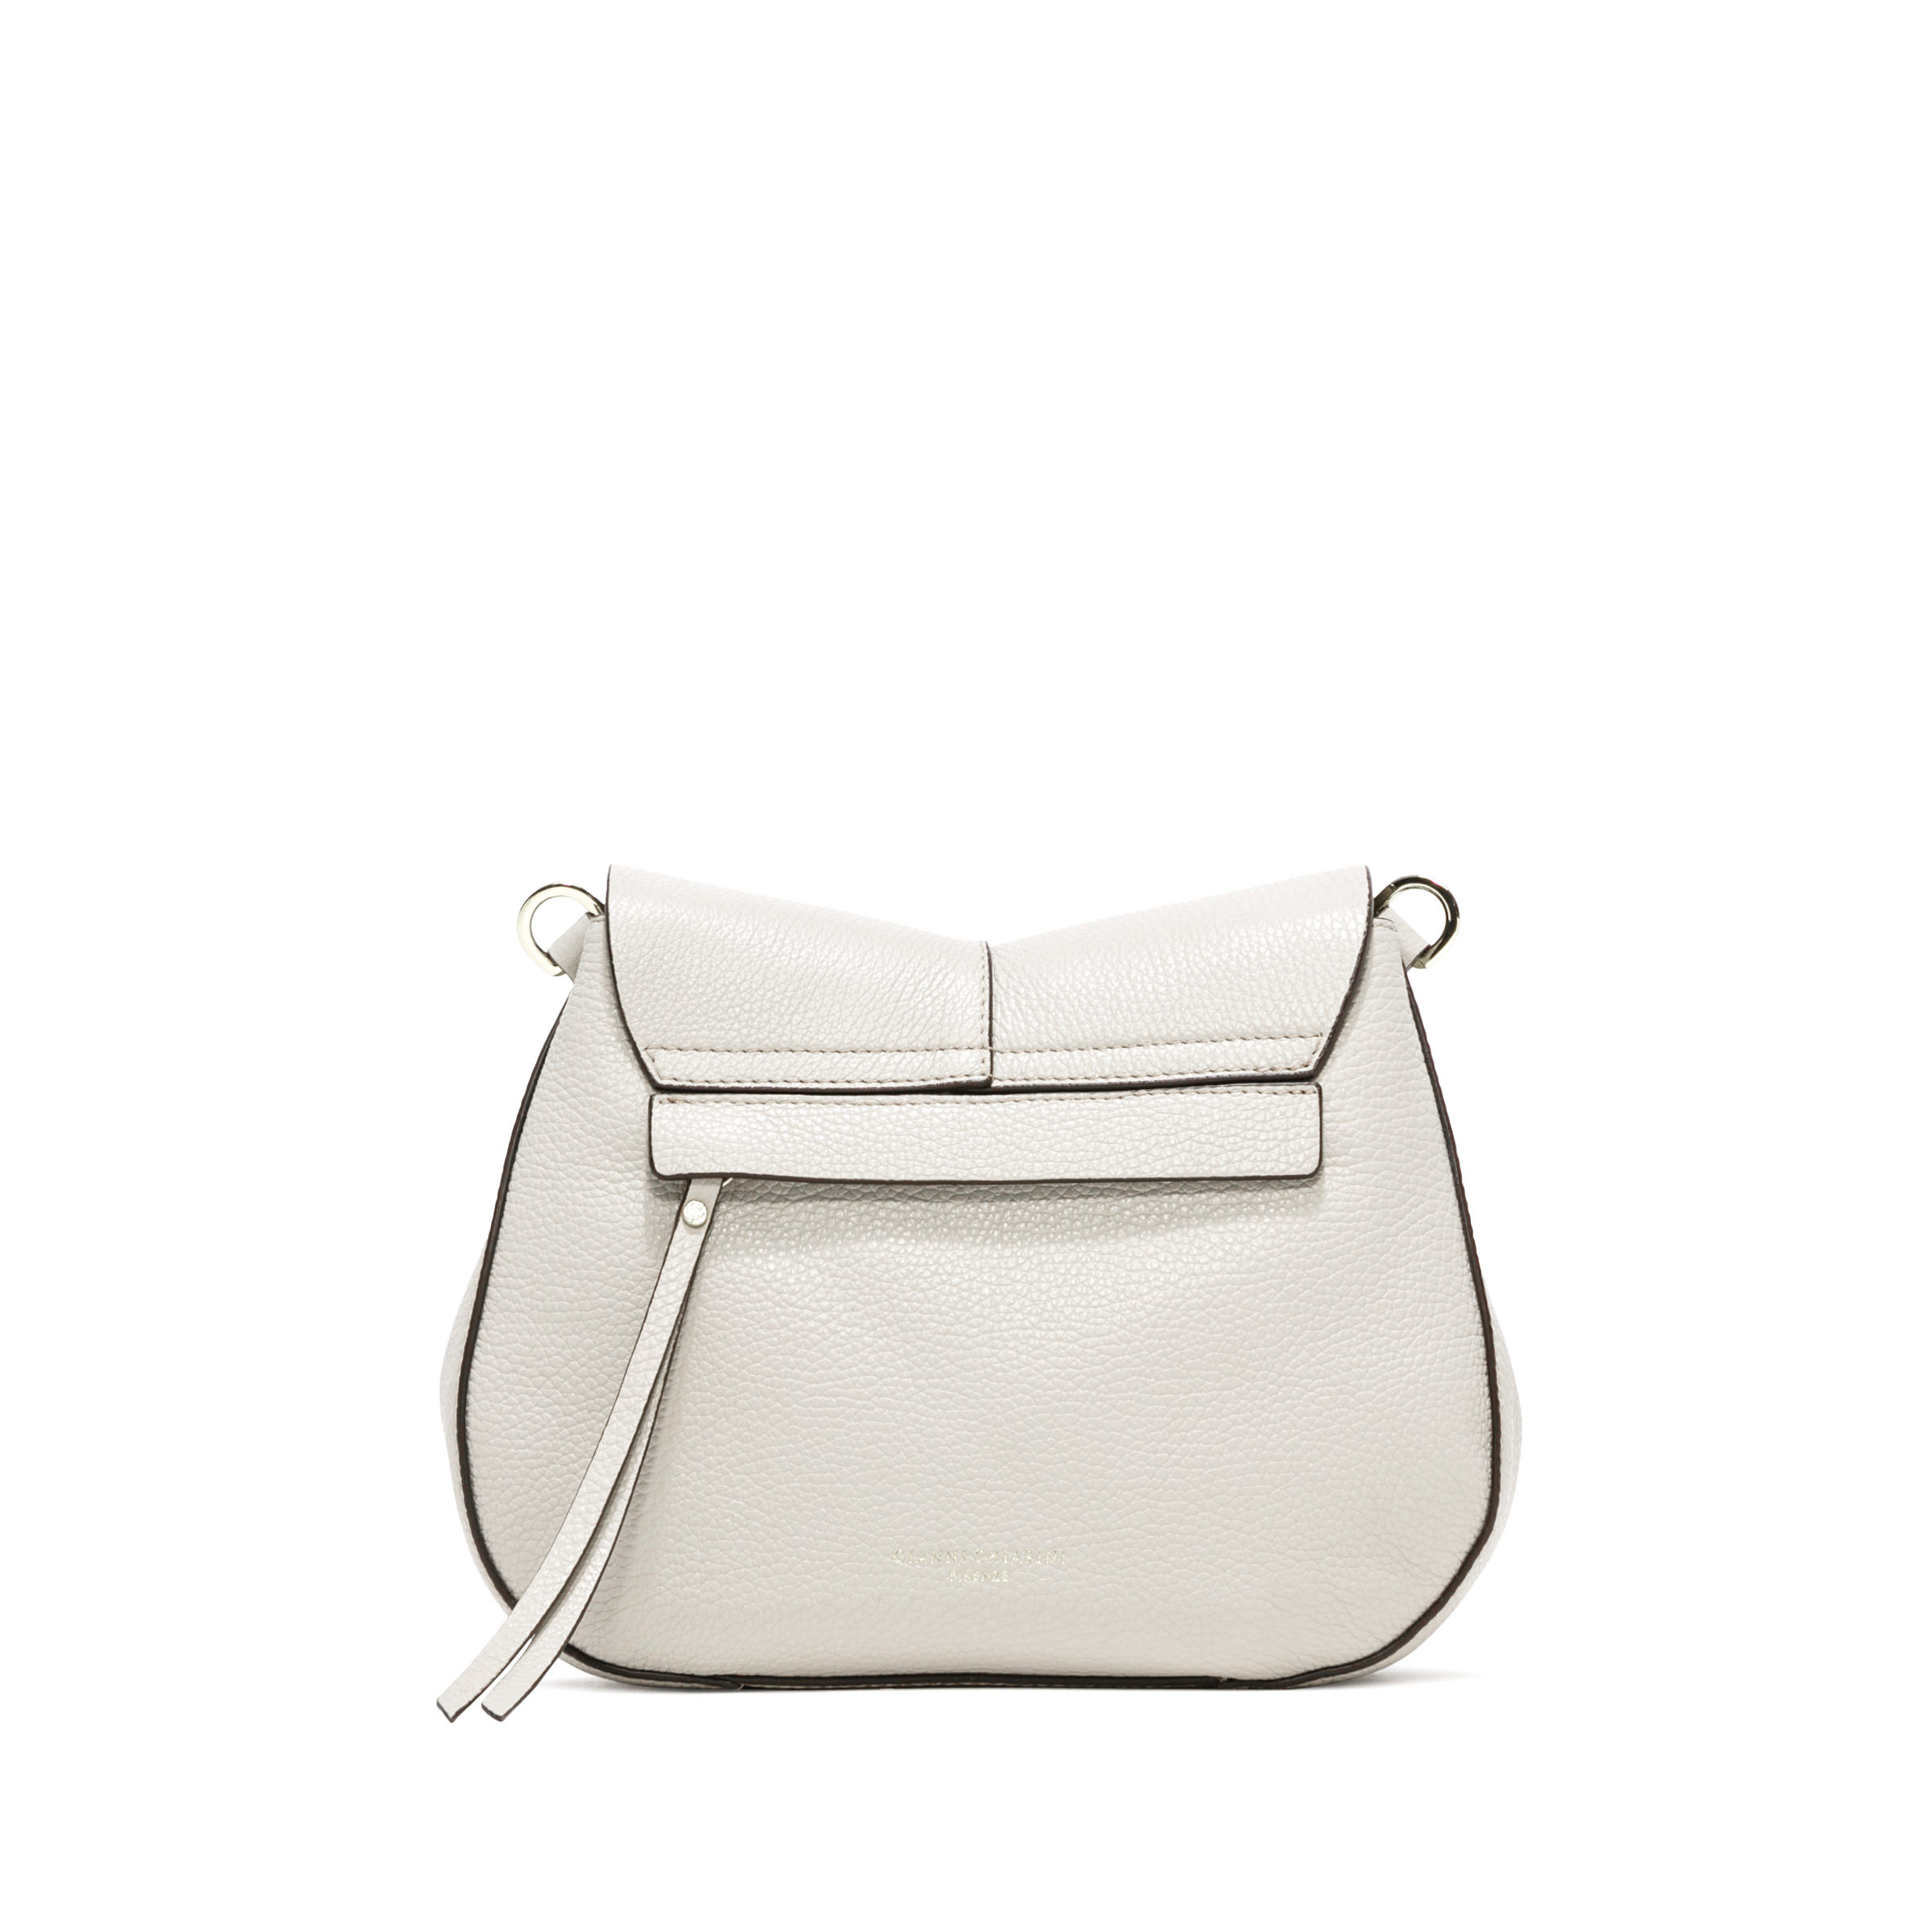 Gianni Chiarini - Helena Round bag in leather, White, large image number 3